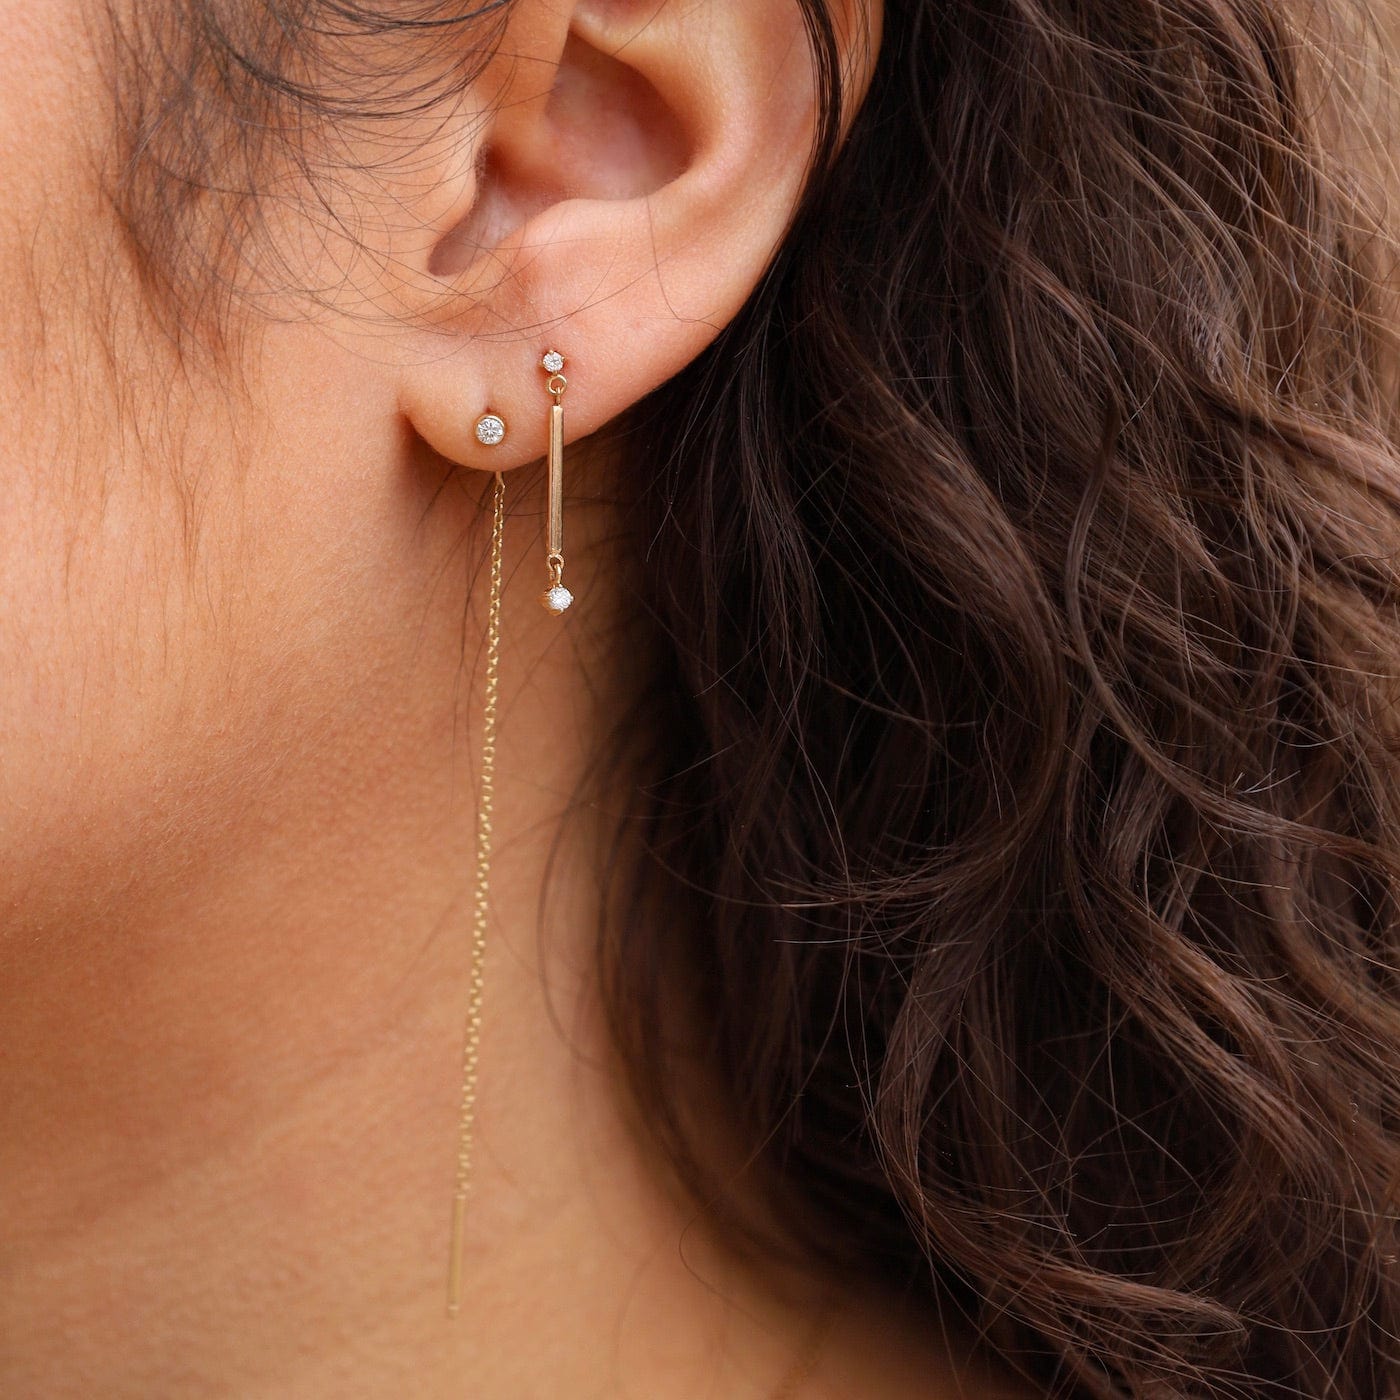 EAR-14K 14k Gold Square Bar Linked Earrings with 2 Graduating Diamonds